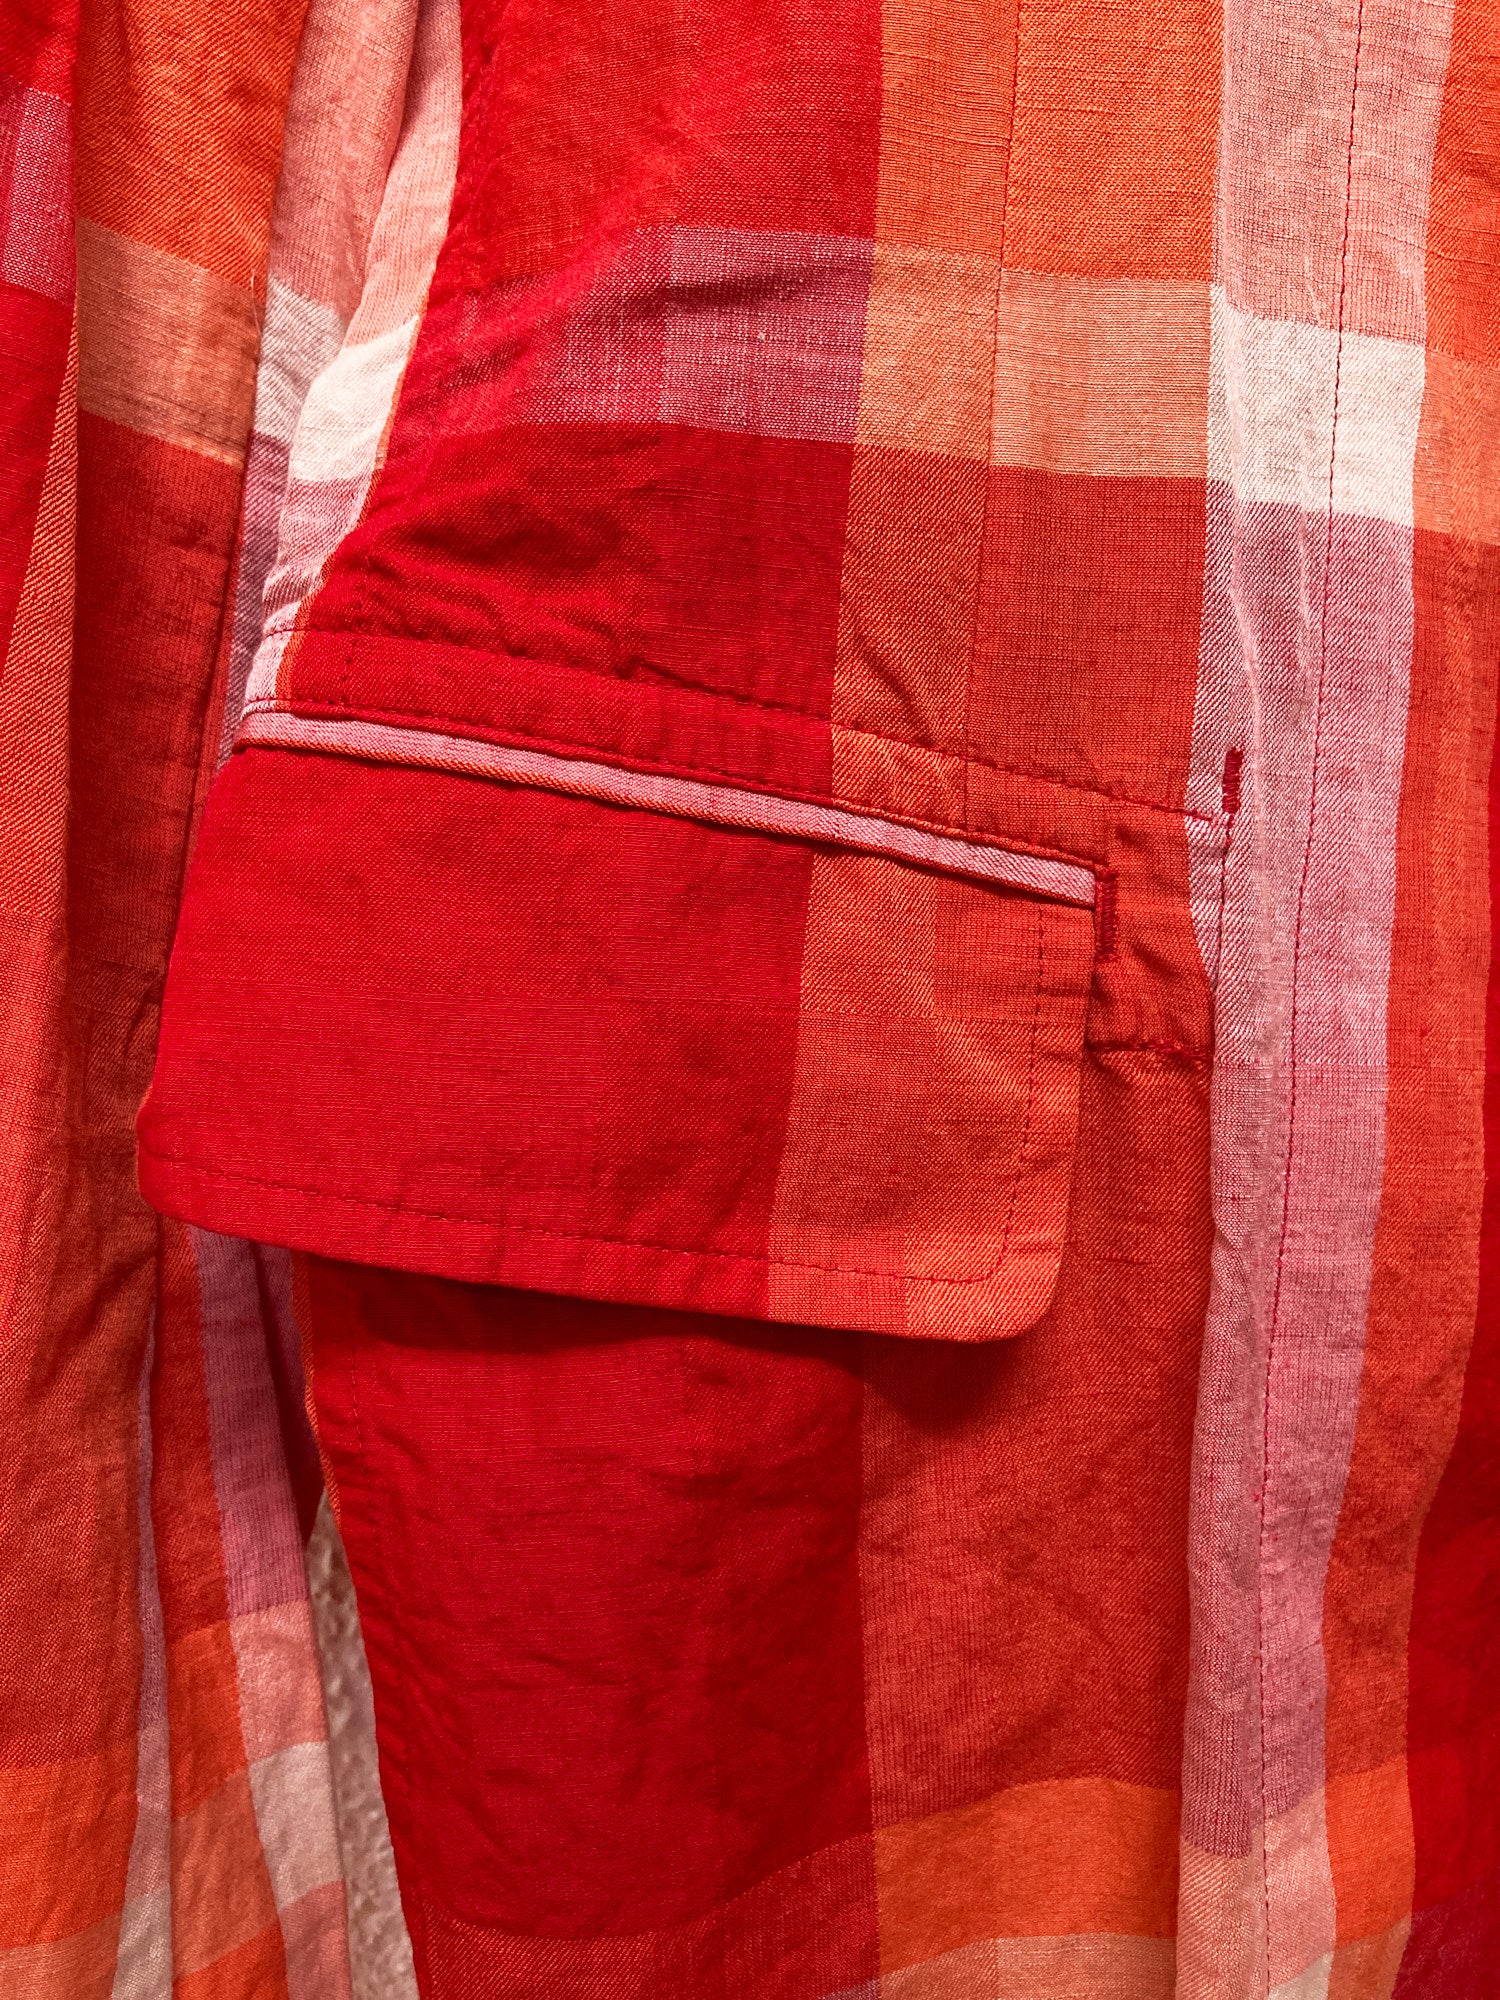 Y’s Yohji Yamamoto red and orange check two button peak lapel blazer - mens S M